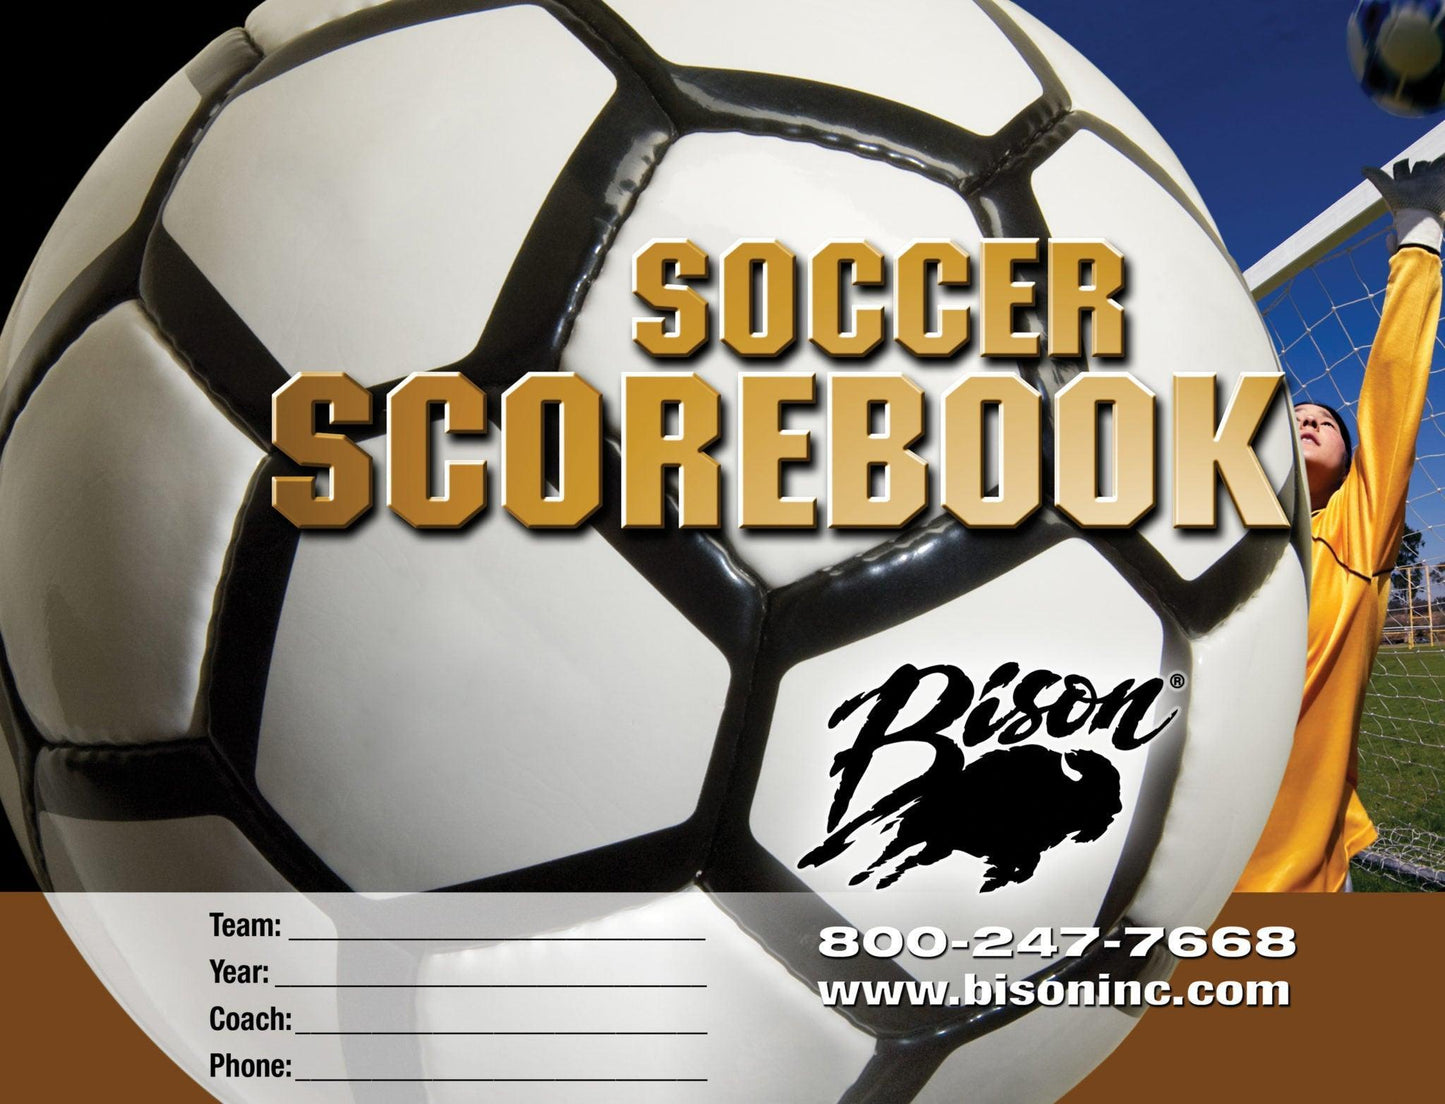 Bison Soccer Team Scorebook - bisoninc